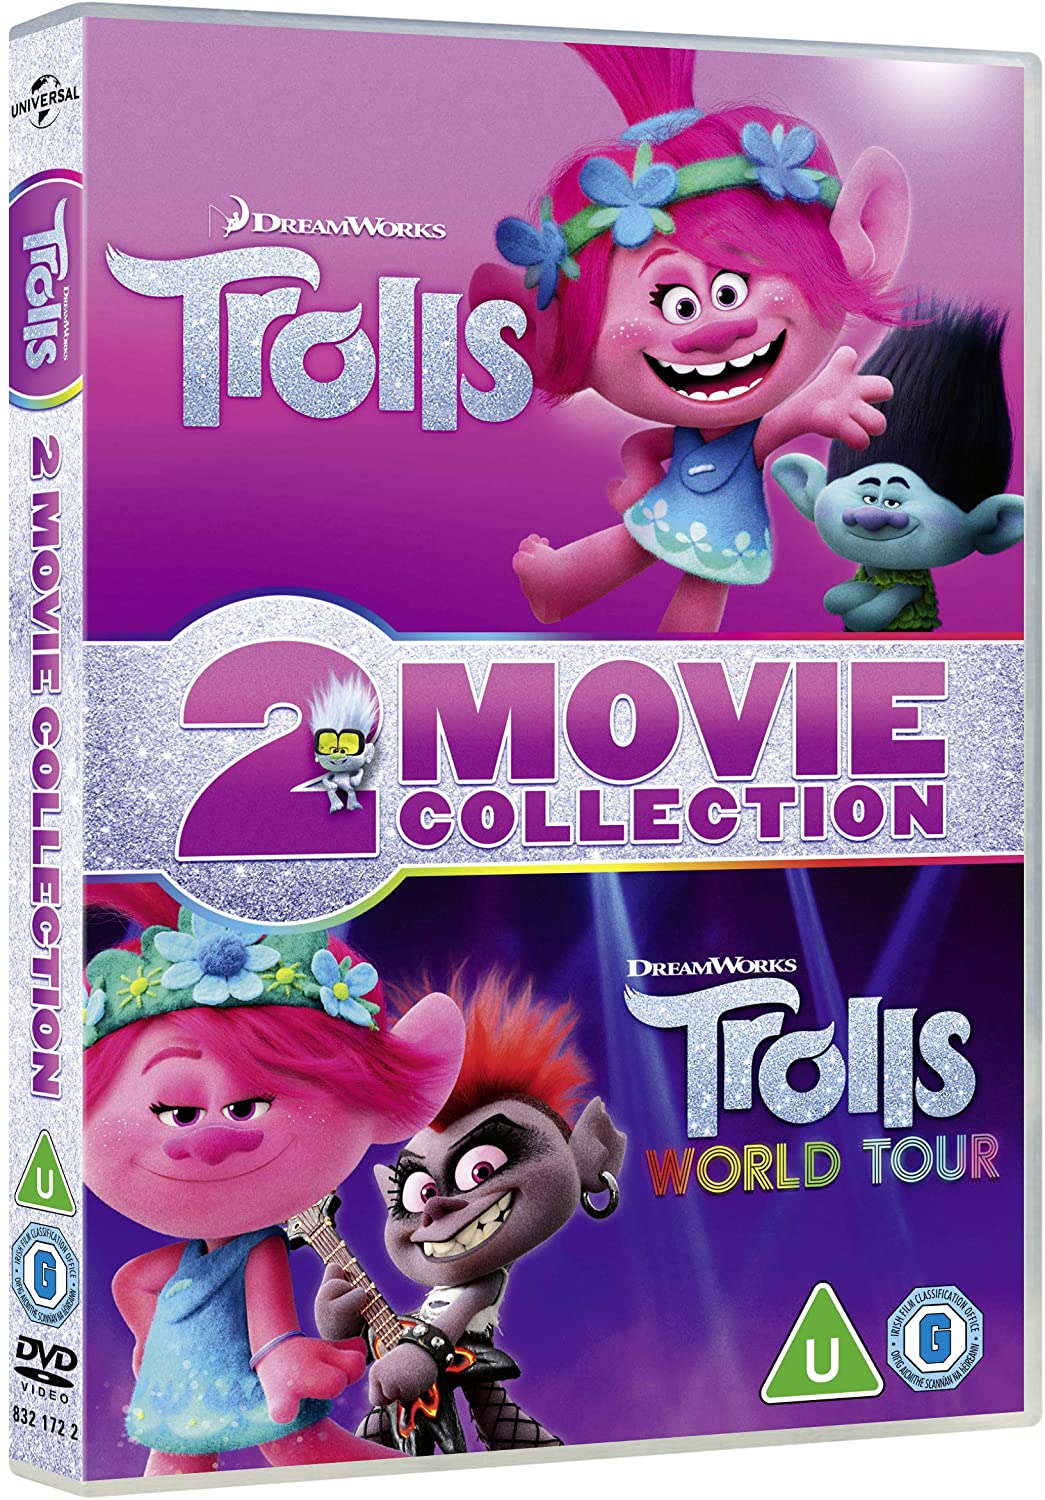 Trolls 2 Film Collection (Dreamworks) (DVD)